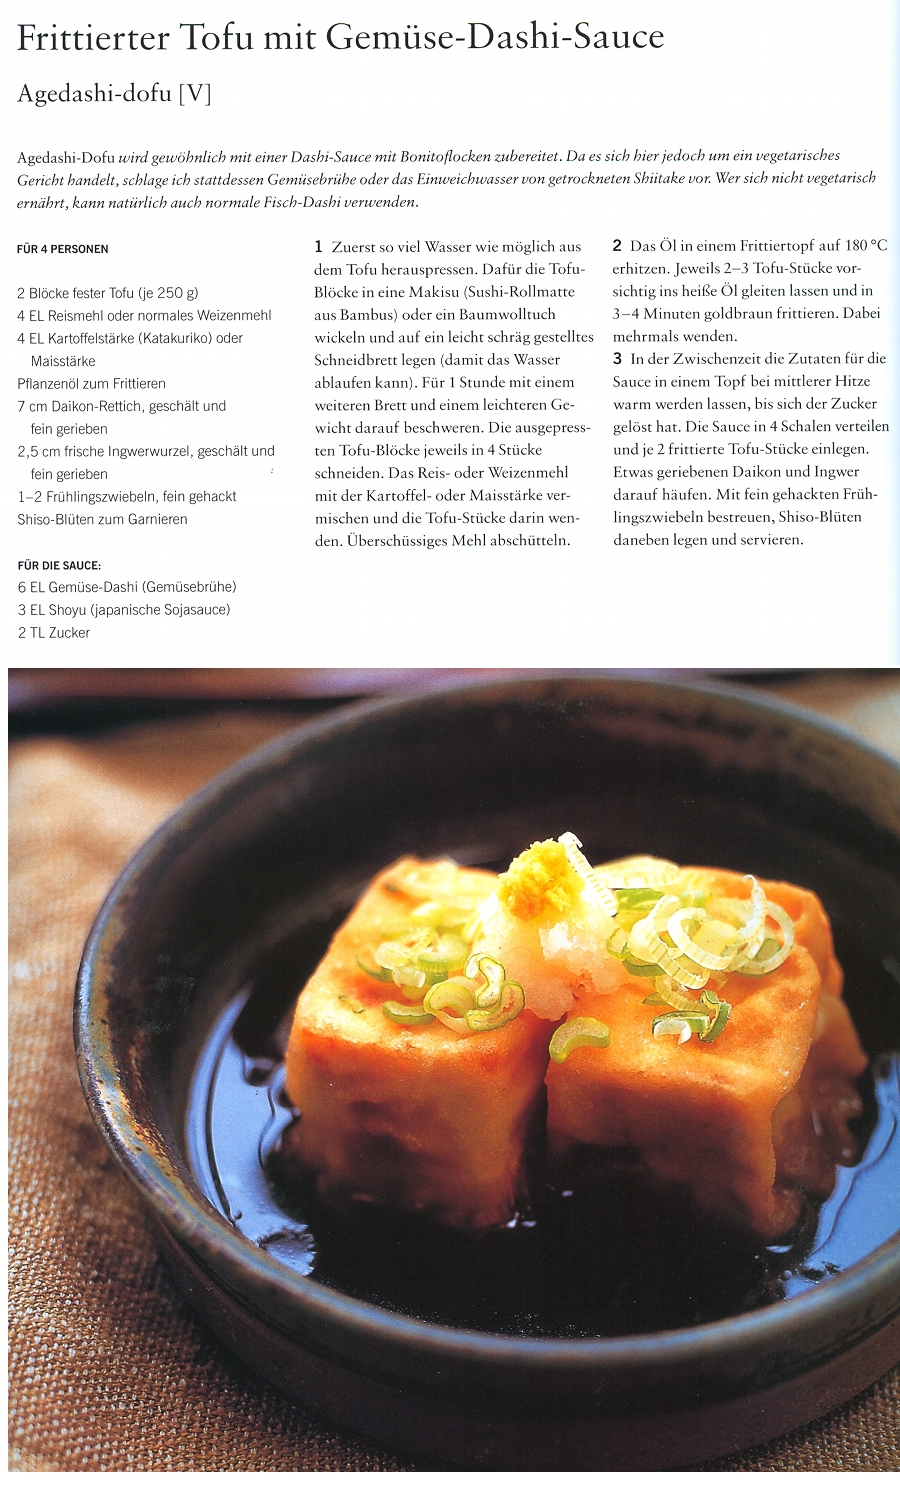 Frittierter Tofu mit Gemüse Dashi Sauce - 4images - Image Gallery ...